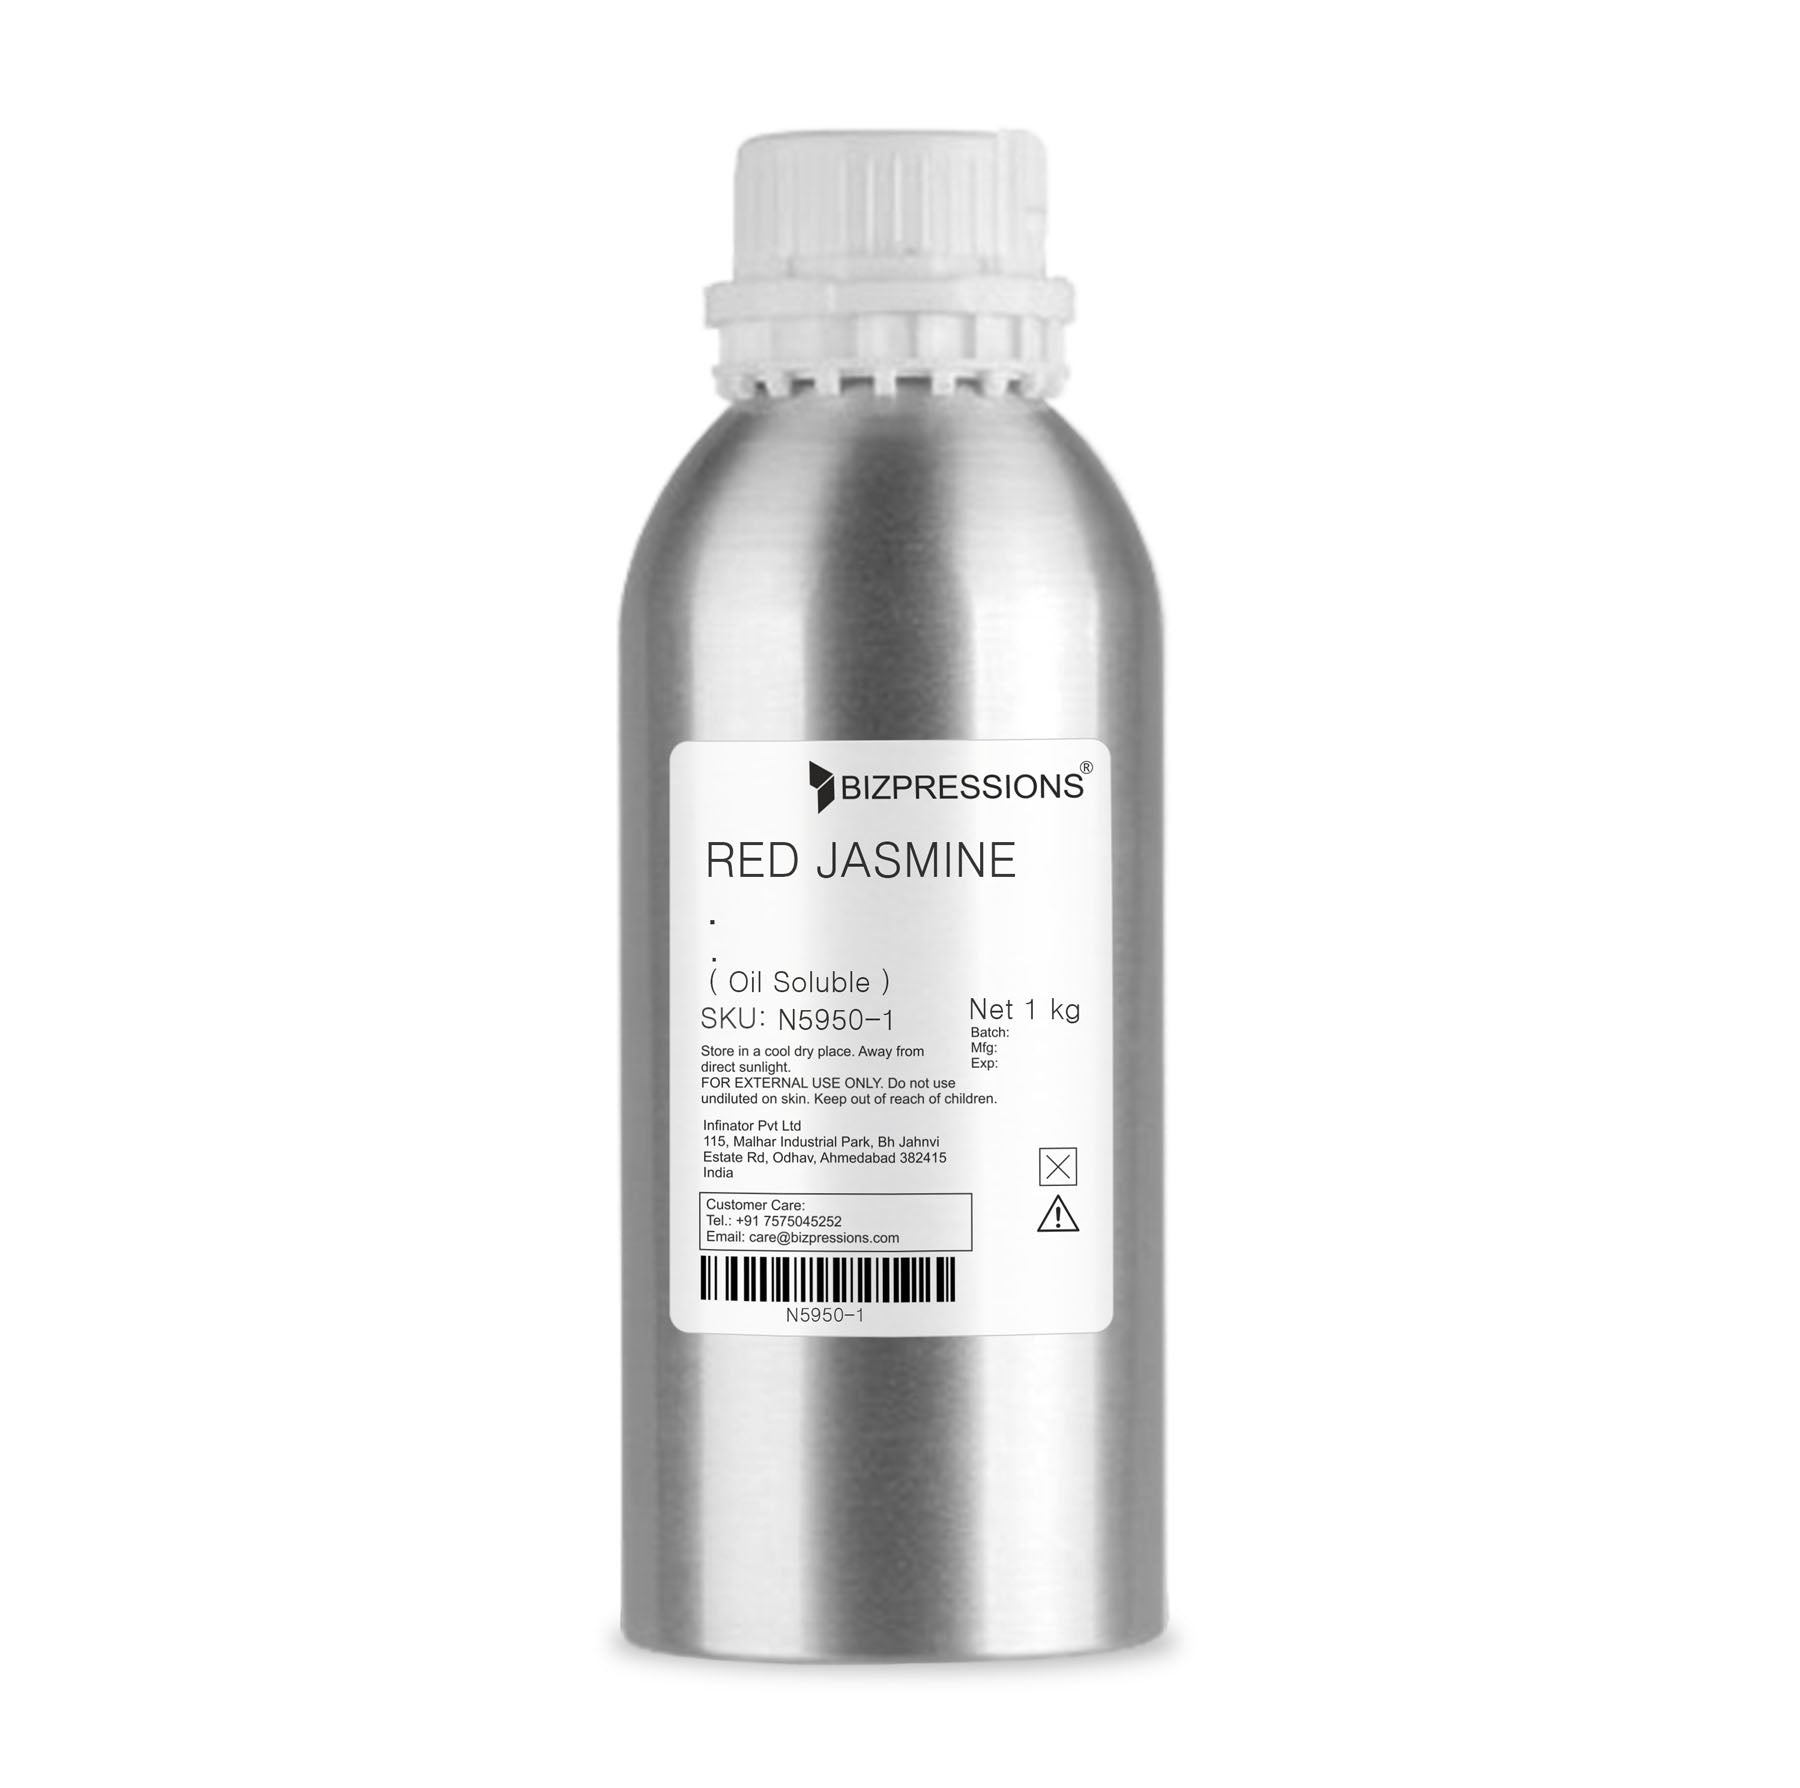 RED JASMINE - Fragrance ( Oil Soluble ) - 1 kg